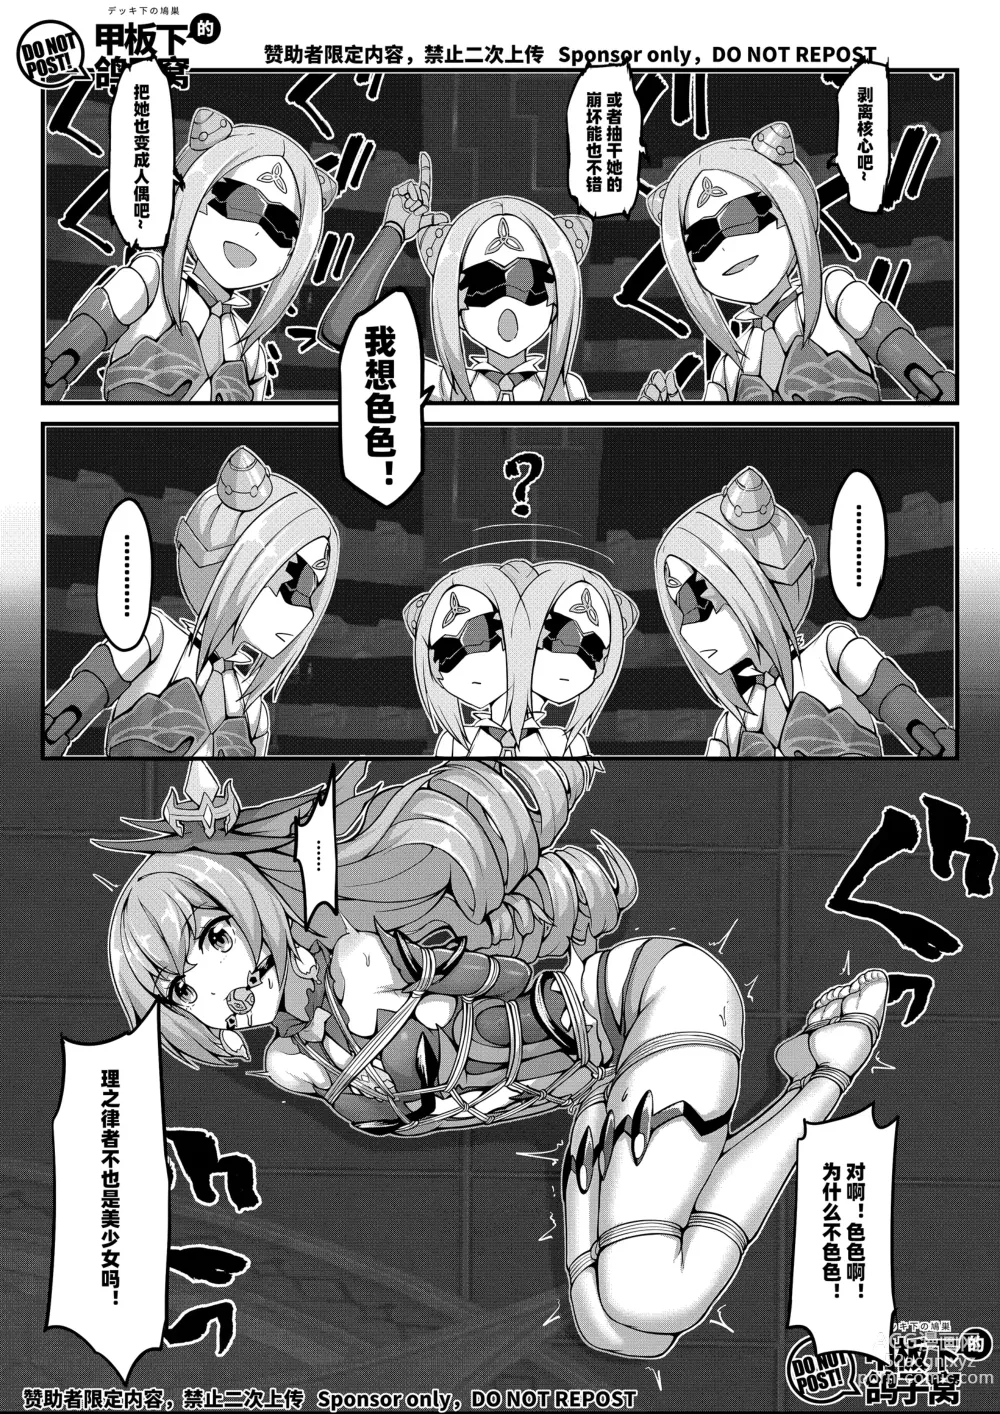 Page 7 of manga 银狼奇遇